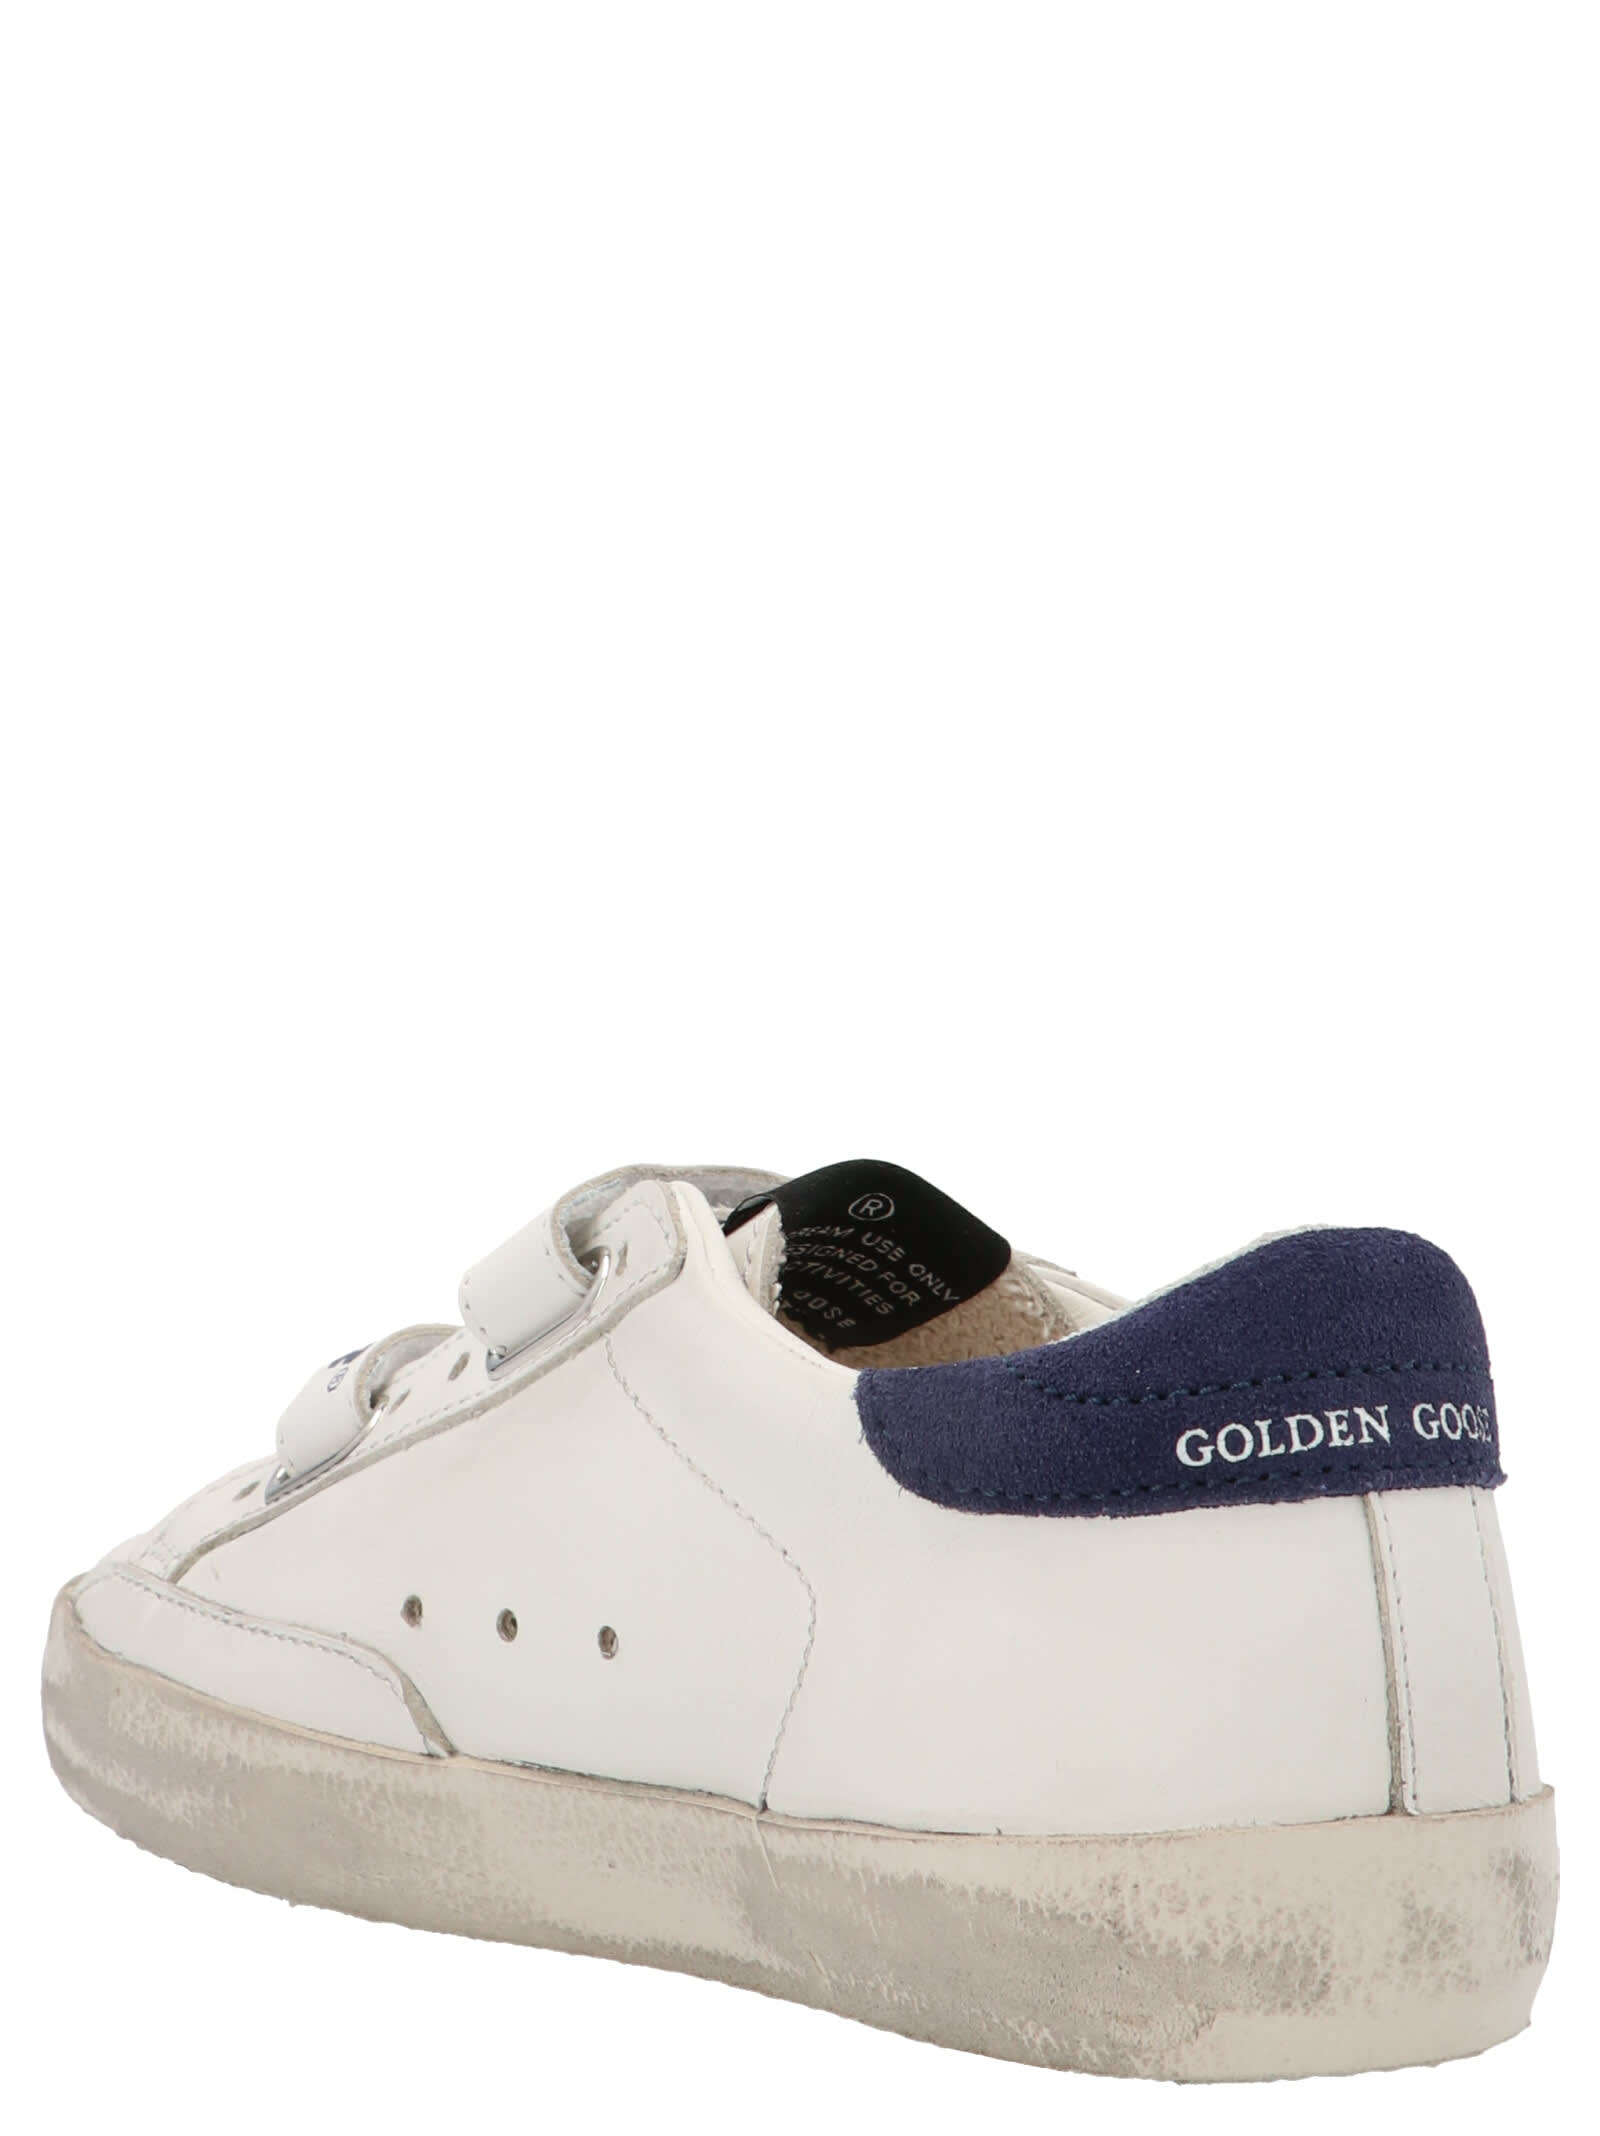 Shop Golden Goose Old School Sneakers In White/black